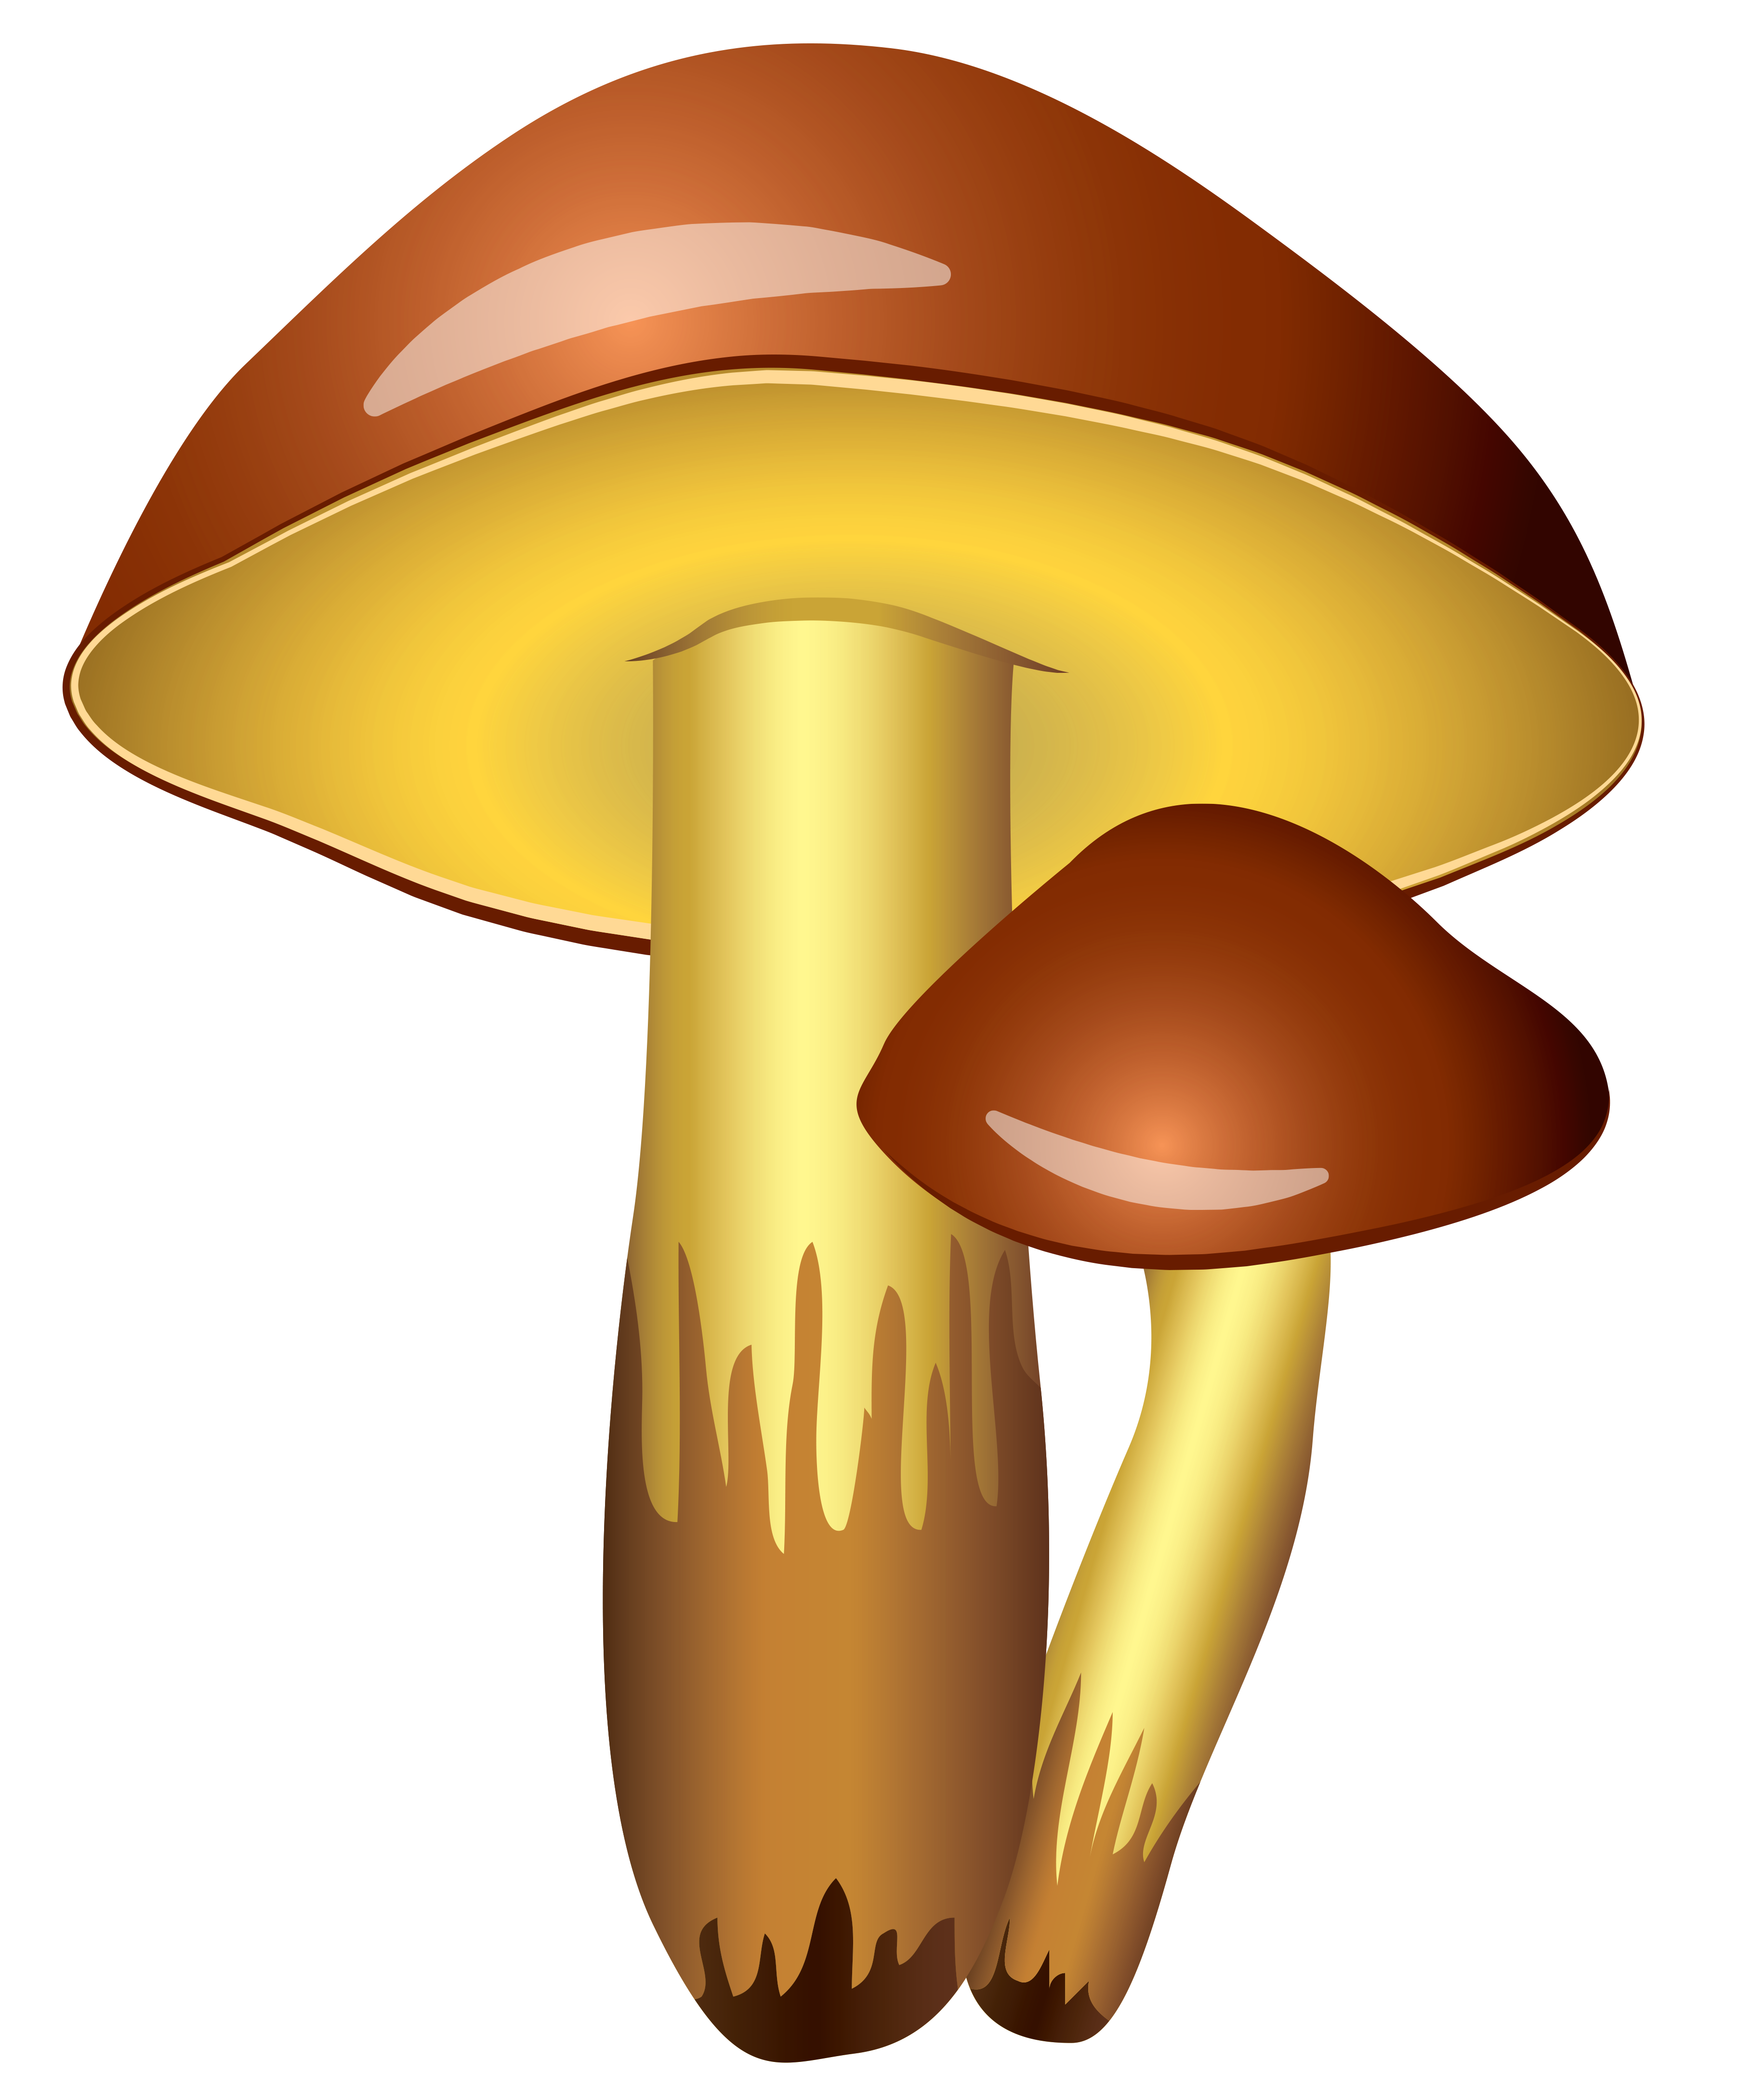 mario mushroom clipart - photo #12